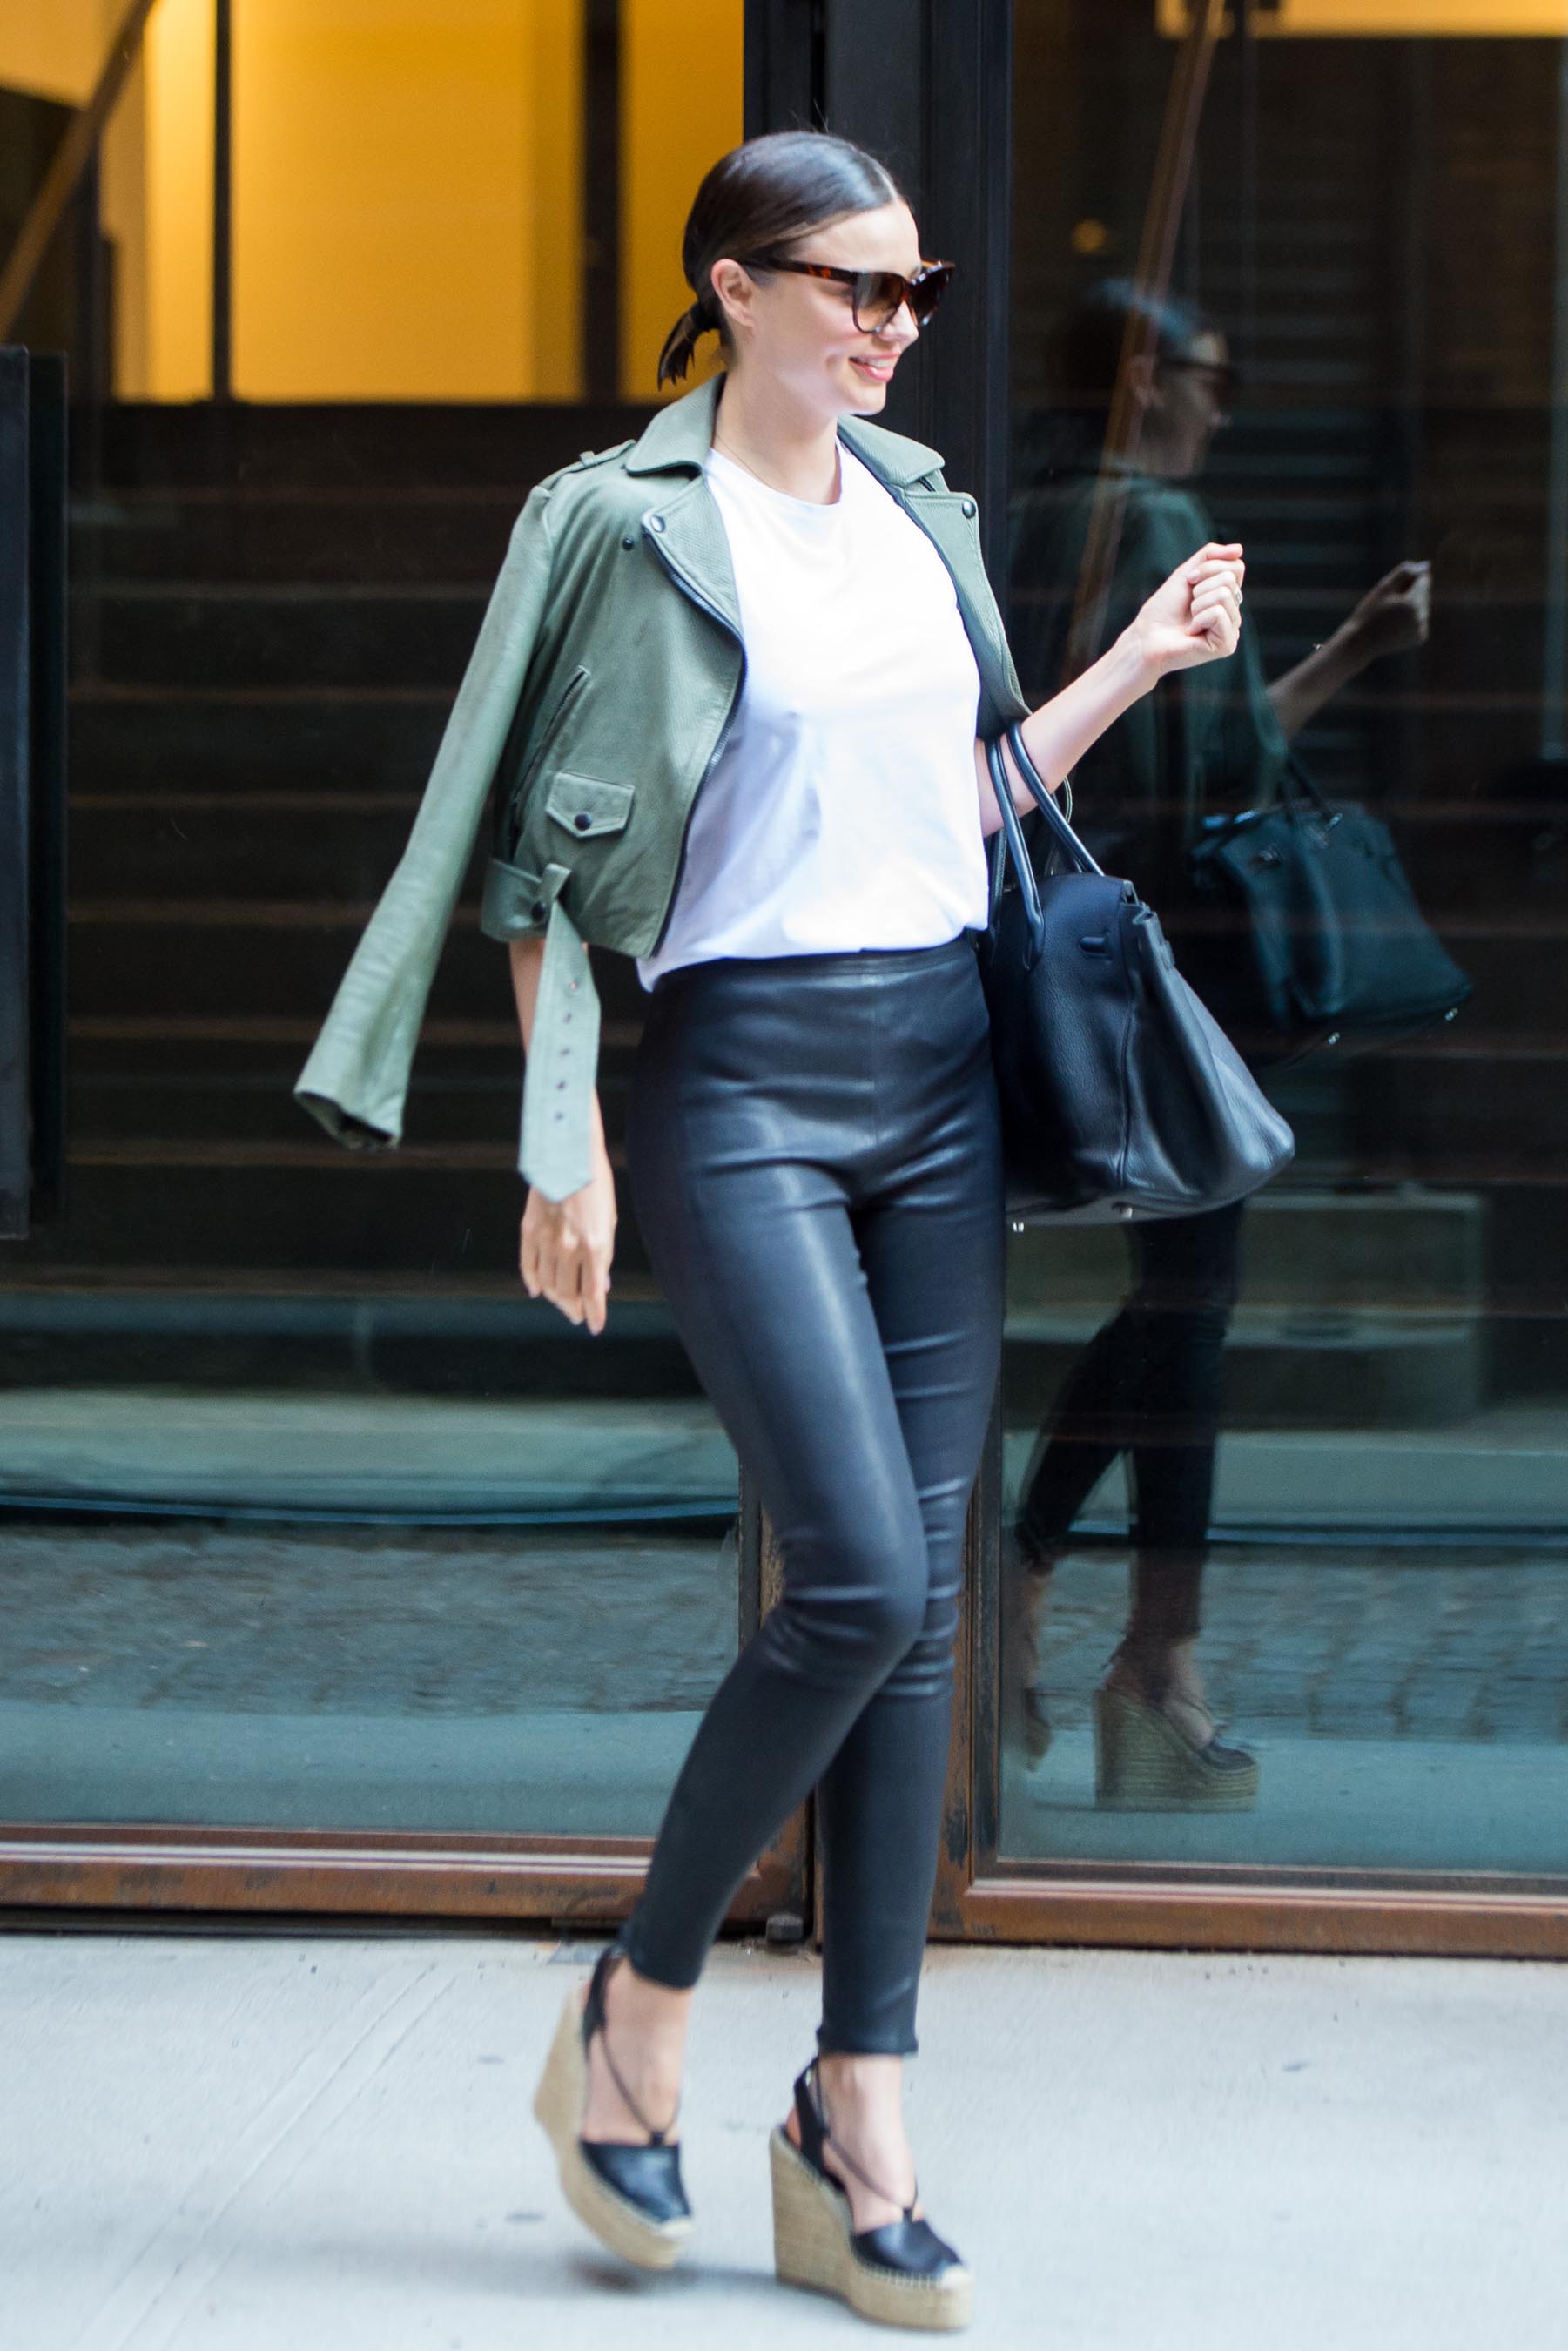 Miranda Kerr out in NYC